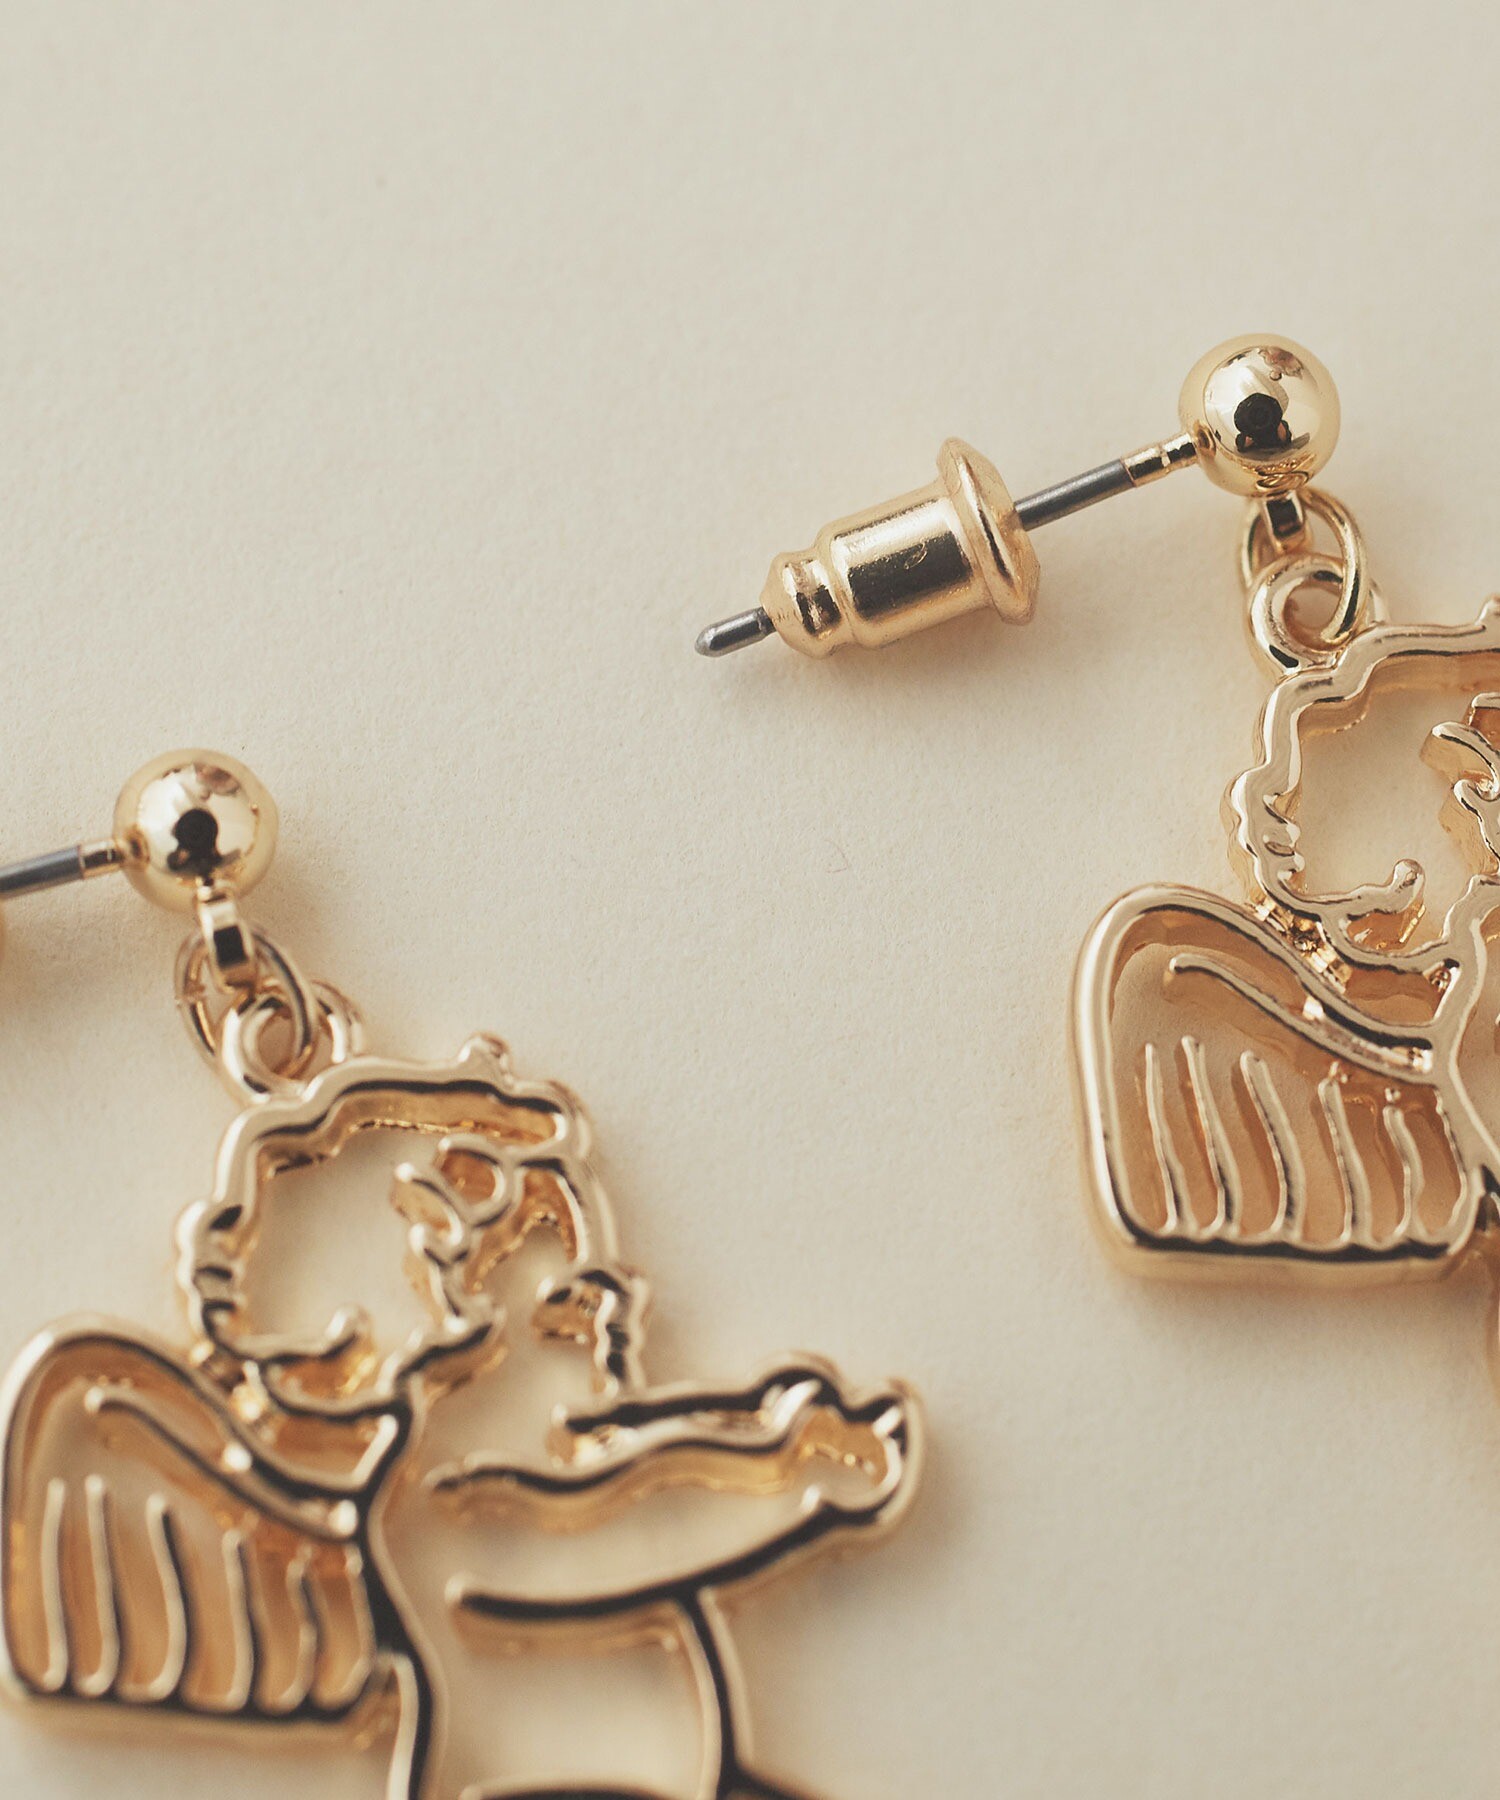 AMBIDEX Store ANGEL CHARM earring / pierce(F ピアス): l'atelier du 